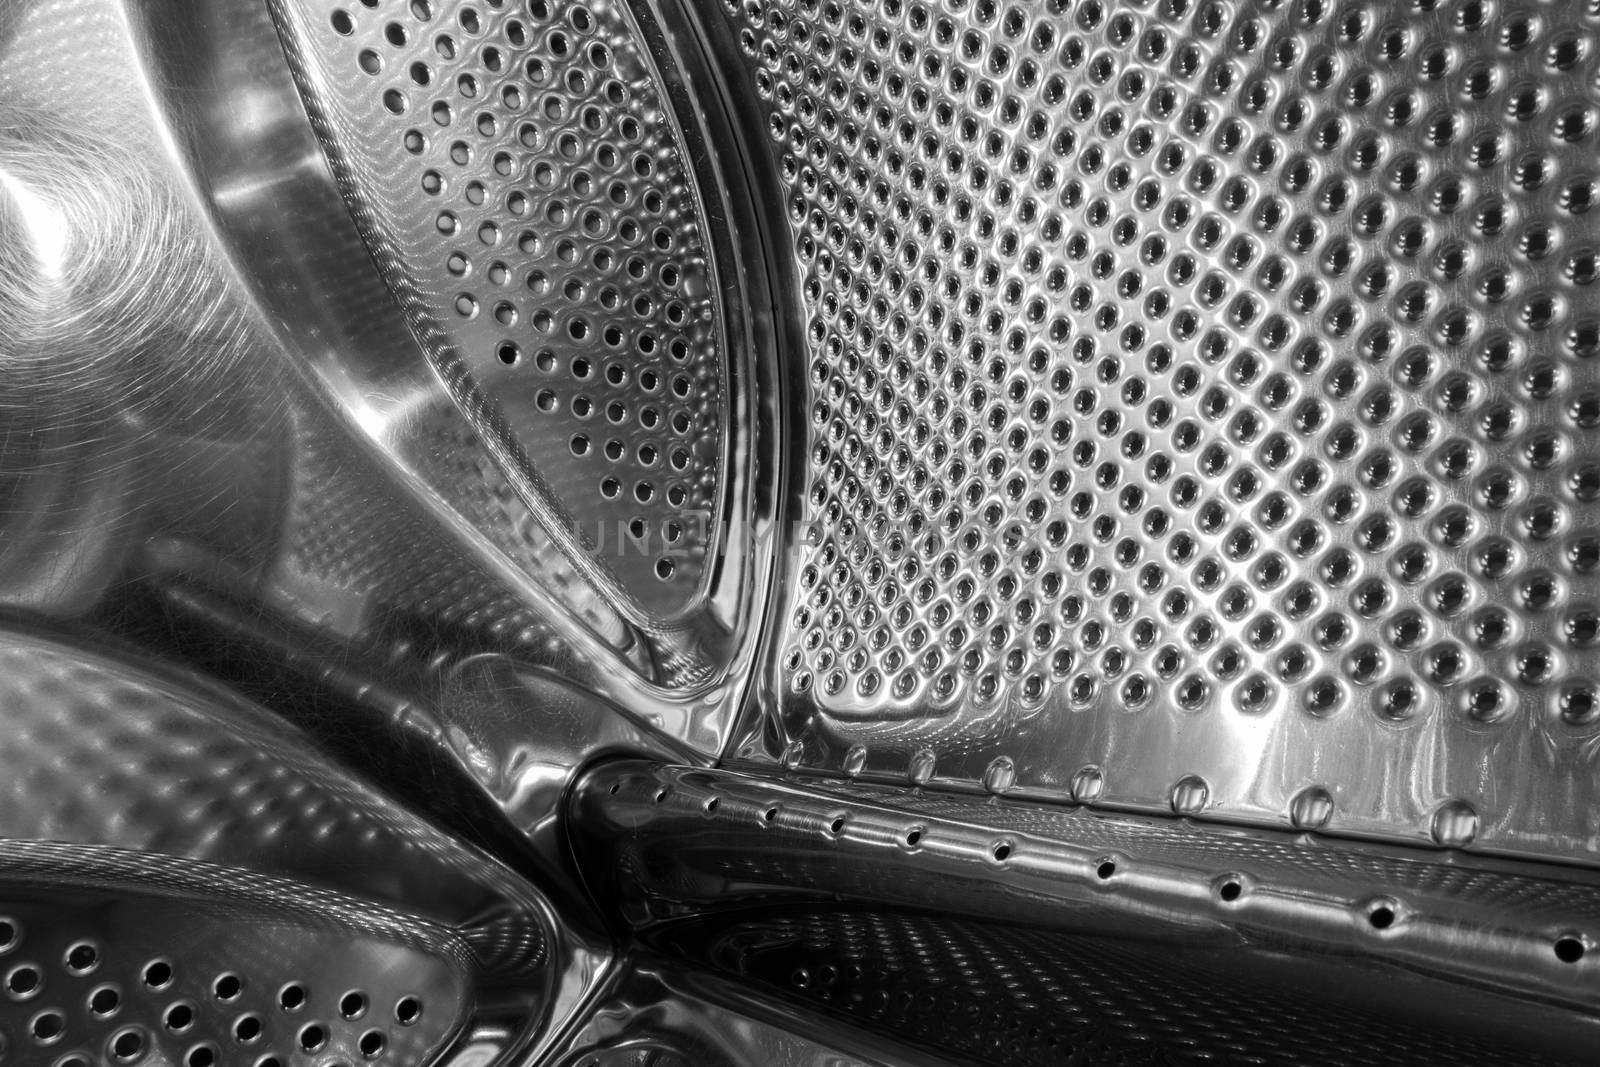 Washing machine drum by Portokalis